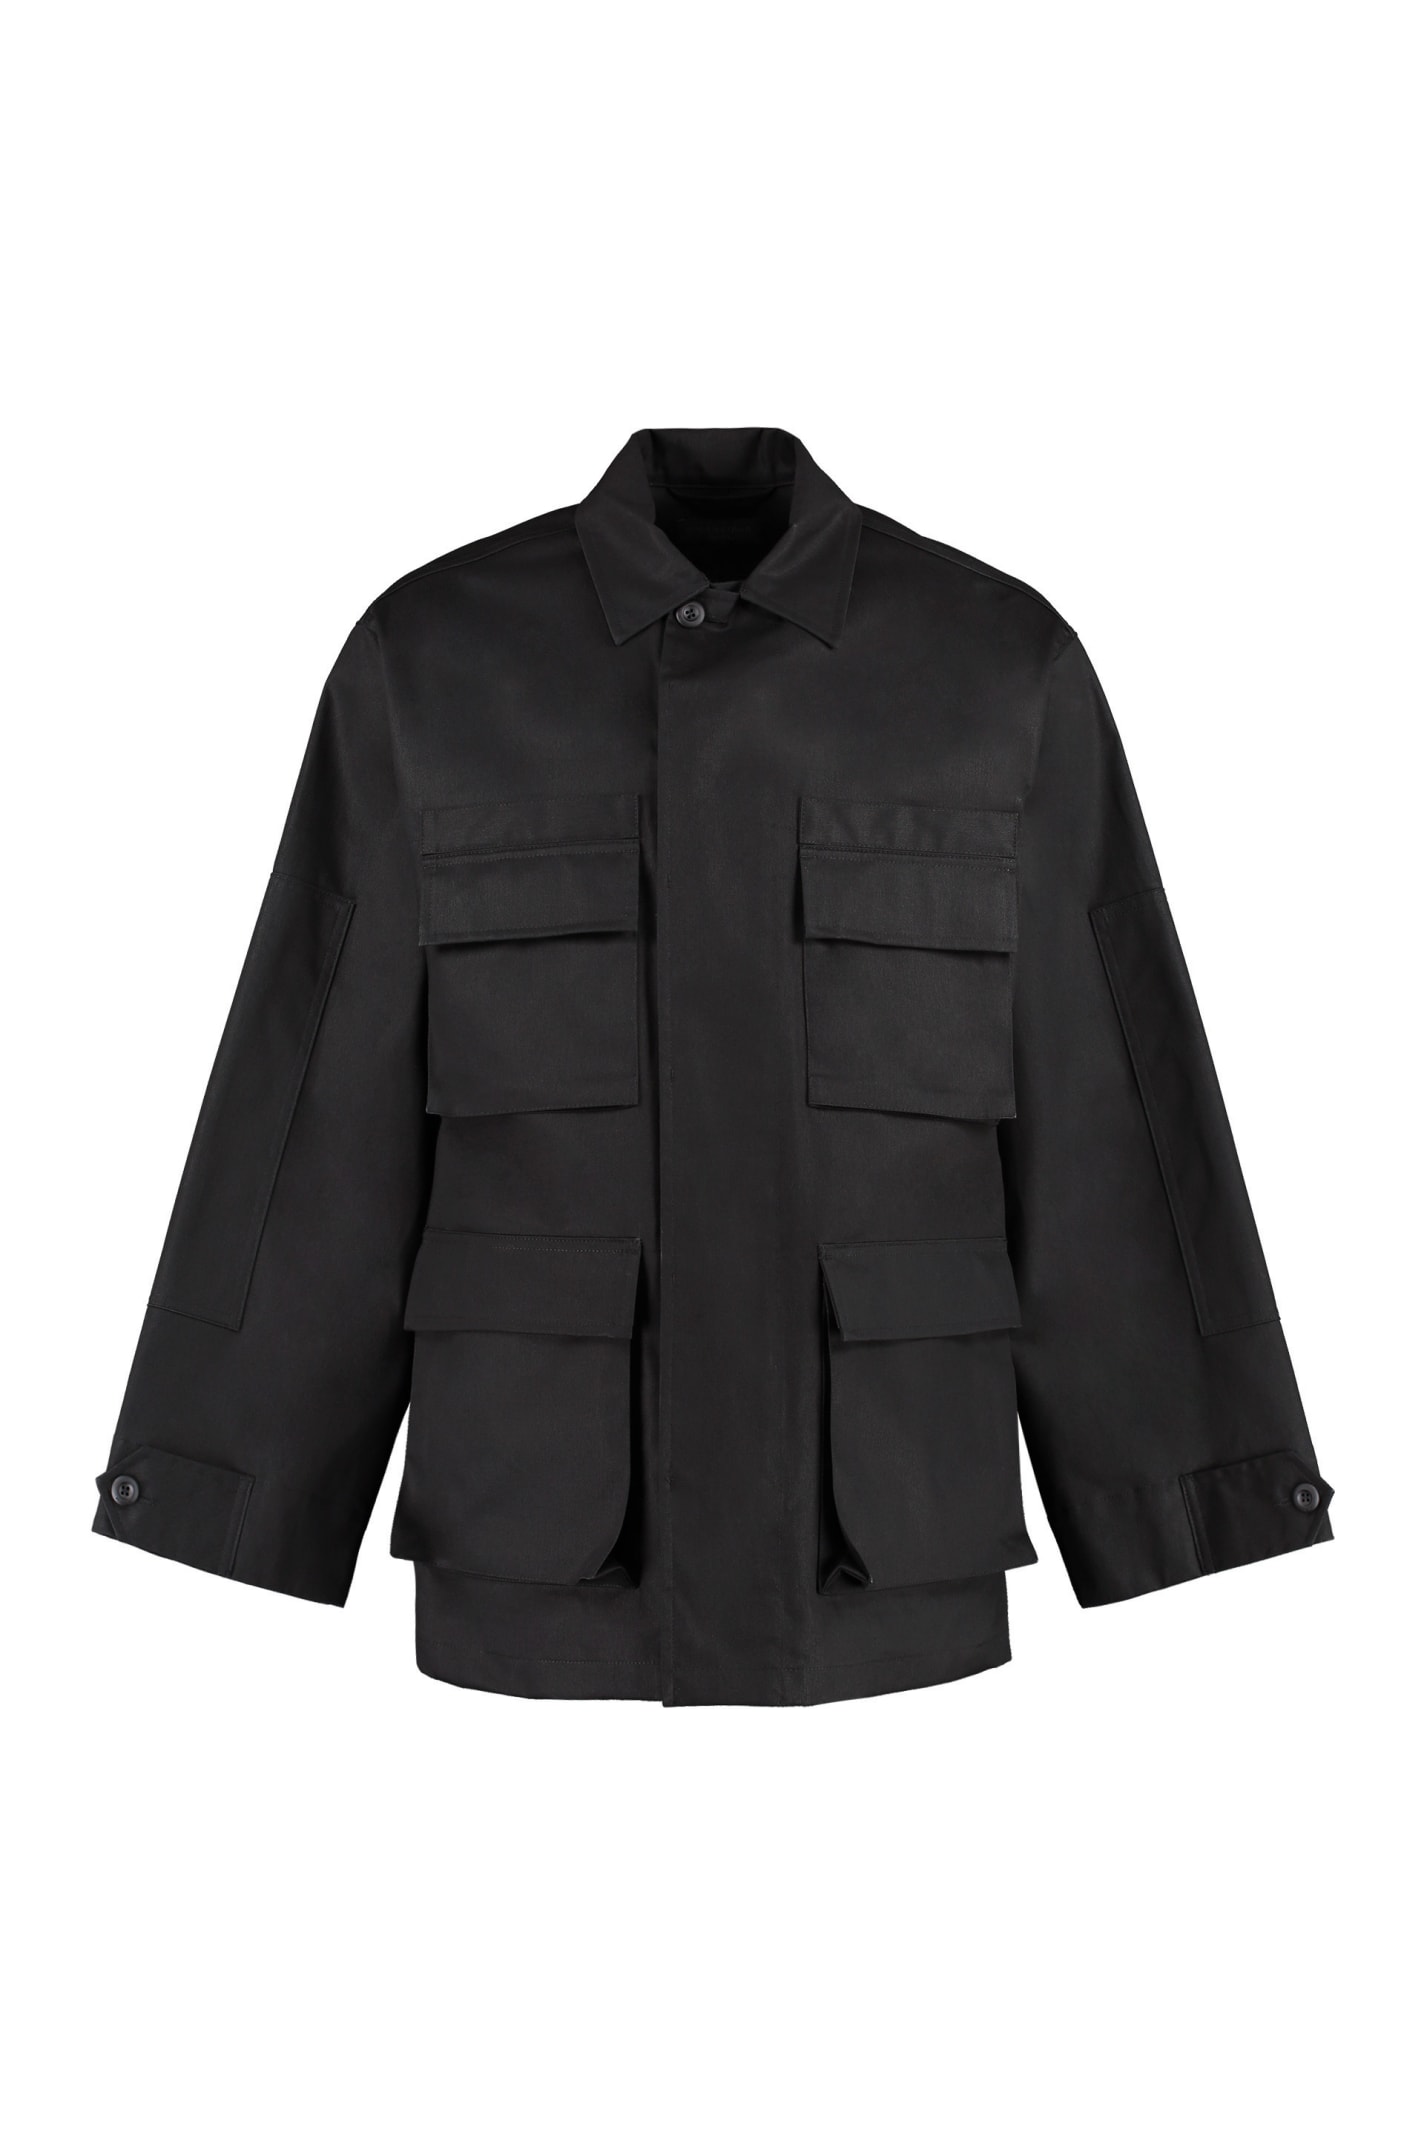 Balenciaga Multi-pocket Cotton Jacket